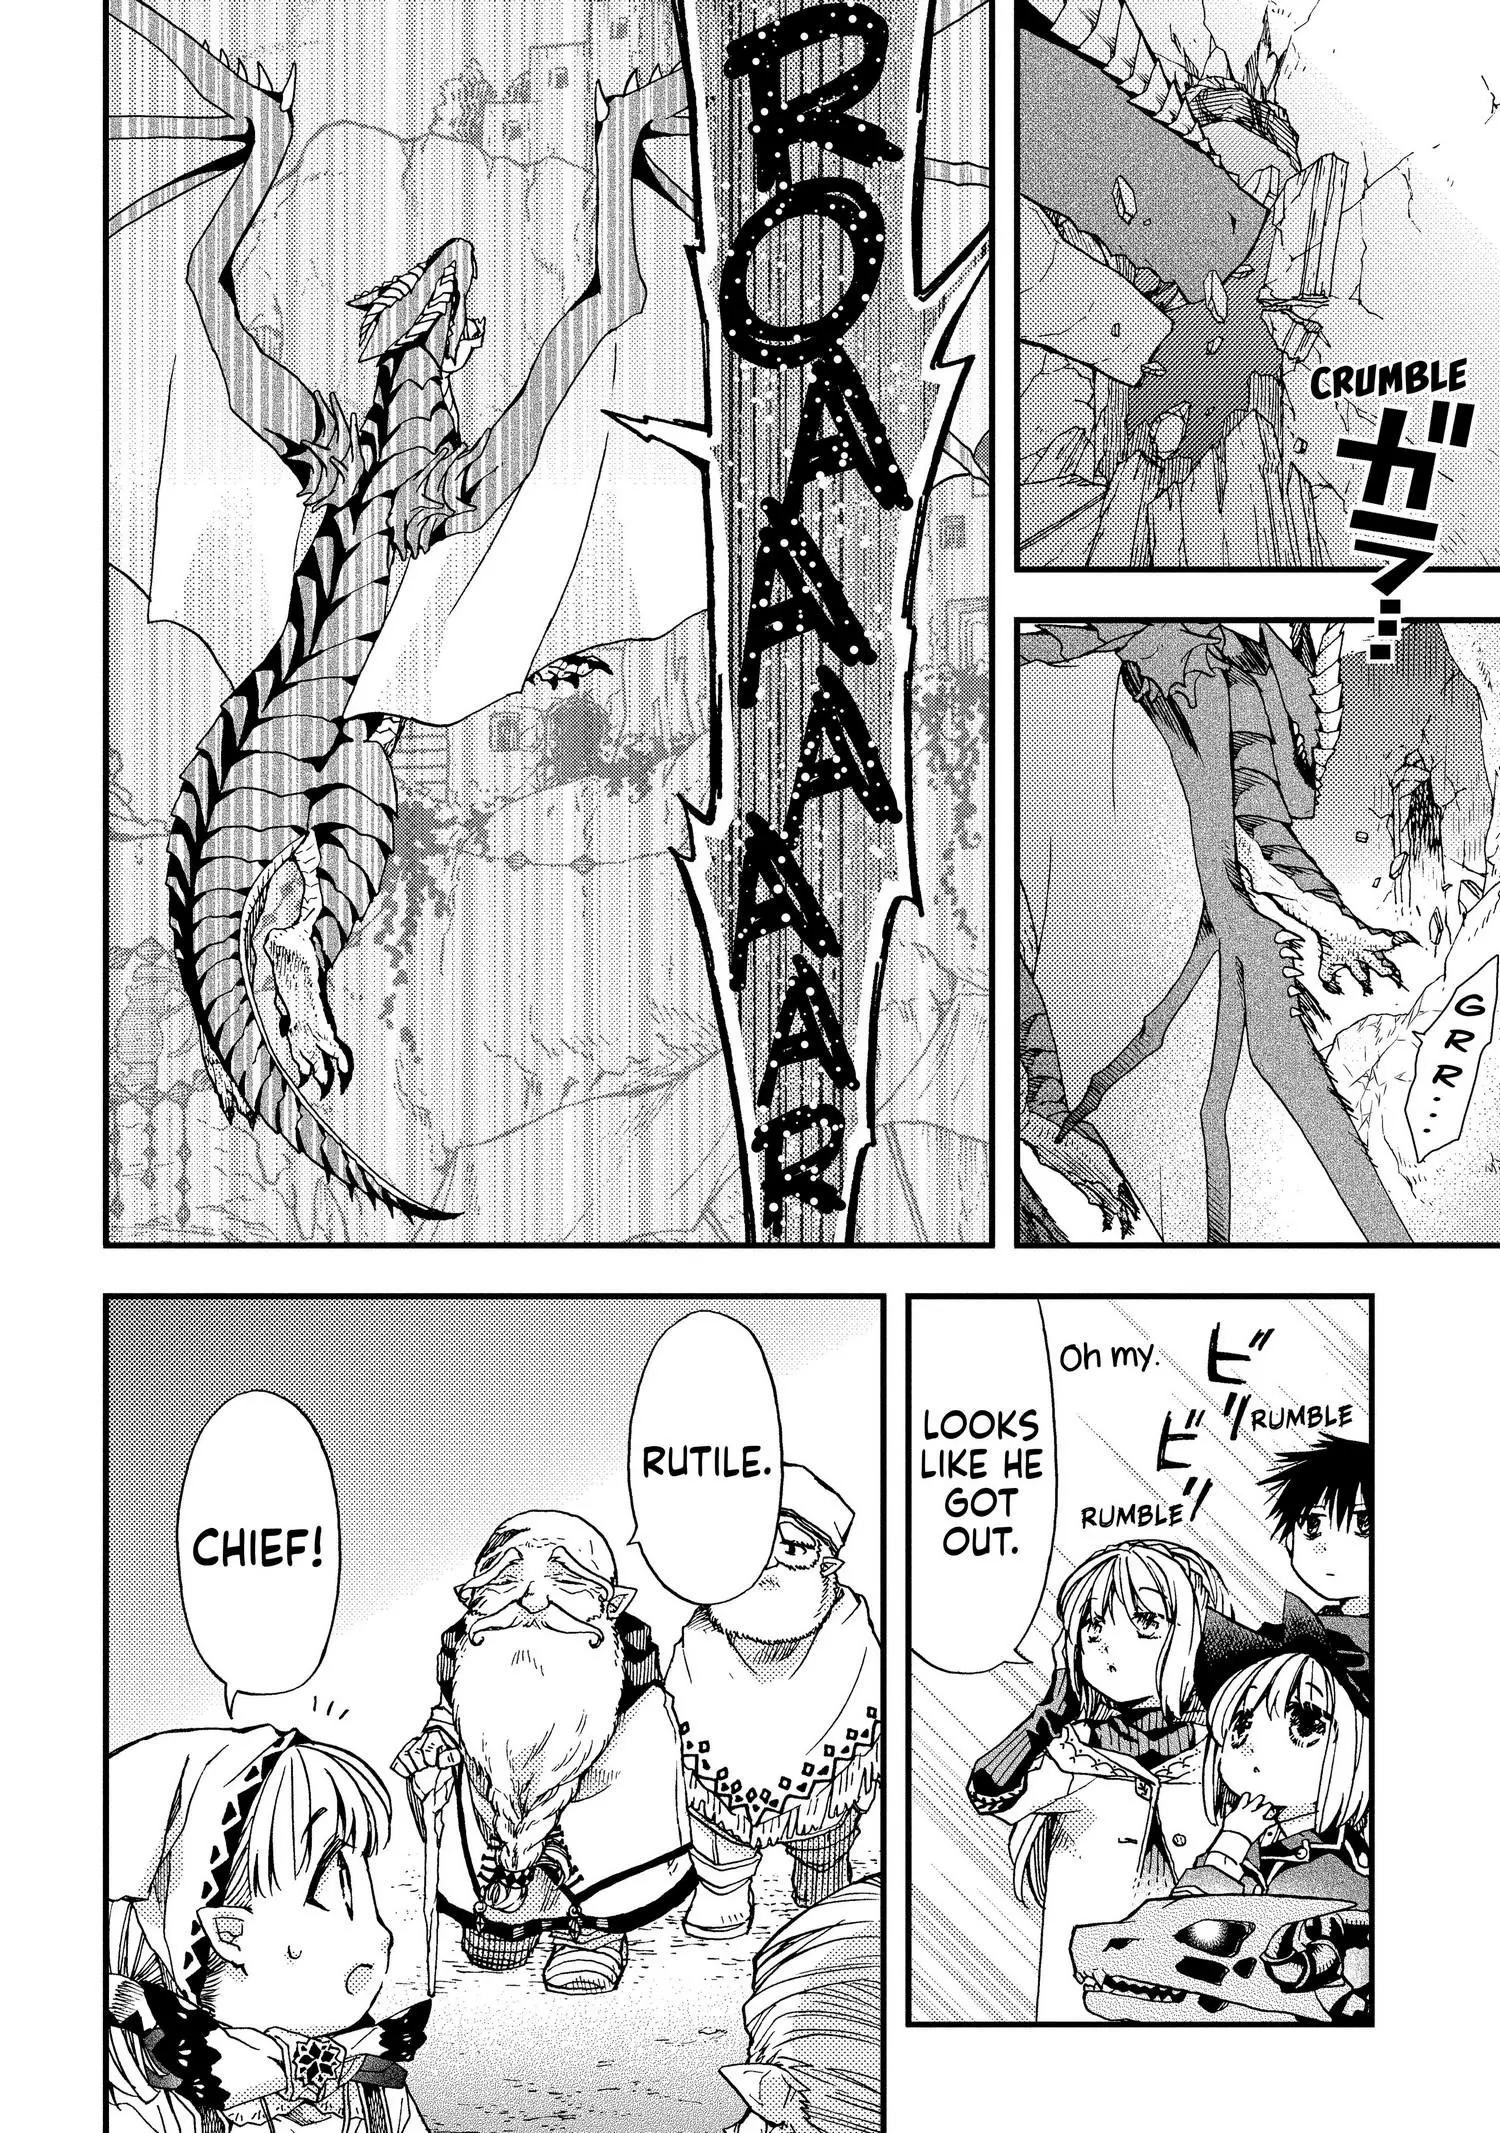 Hone Dragon No Mana Musume - 11 page 11-1fee5c31